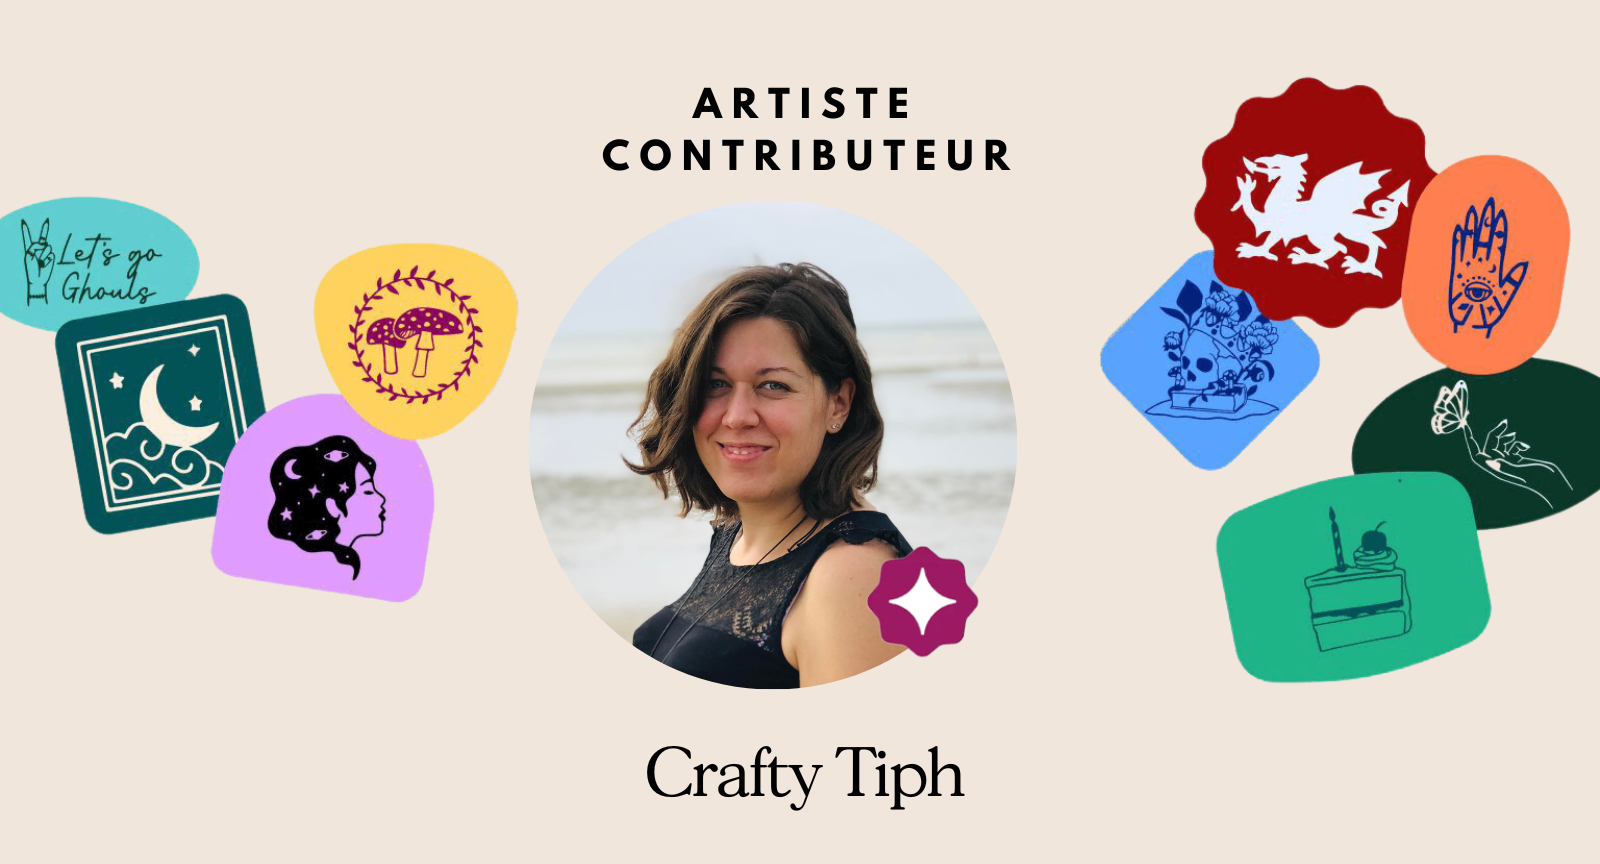 Artistes Contributeurs Cricut - Crafty Tiph